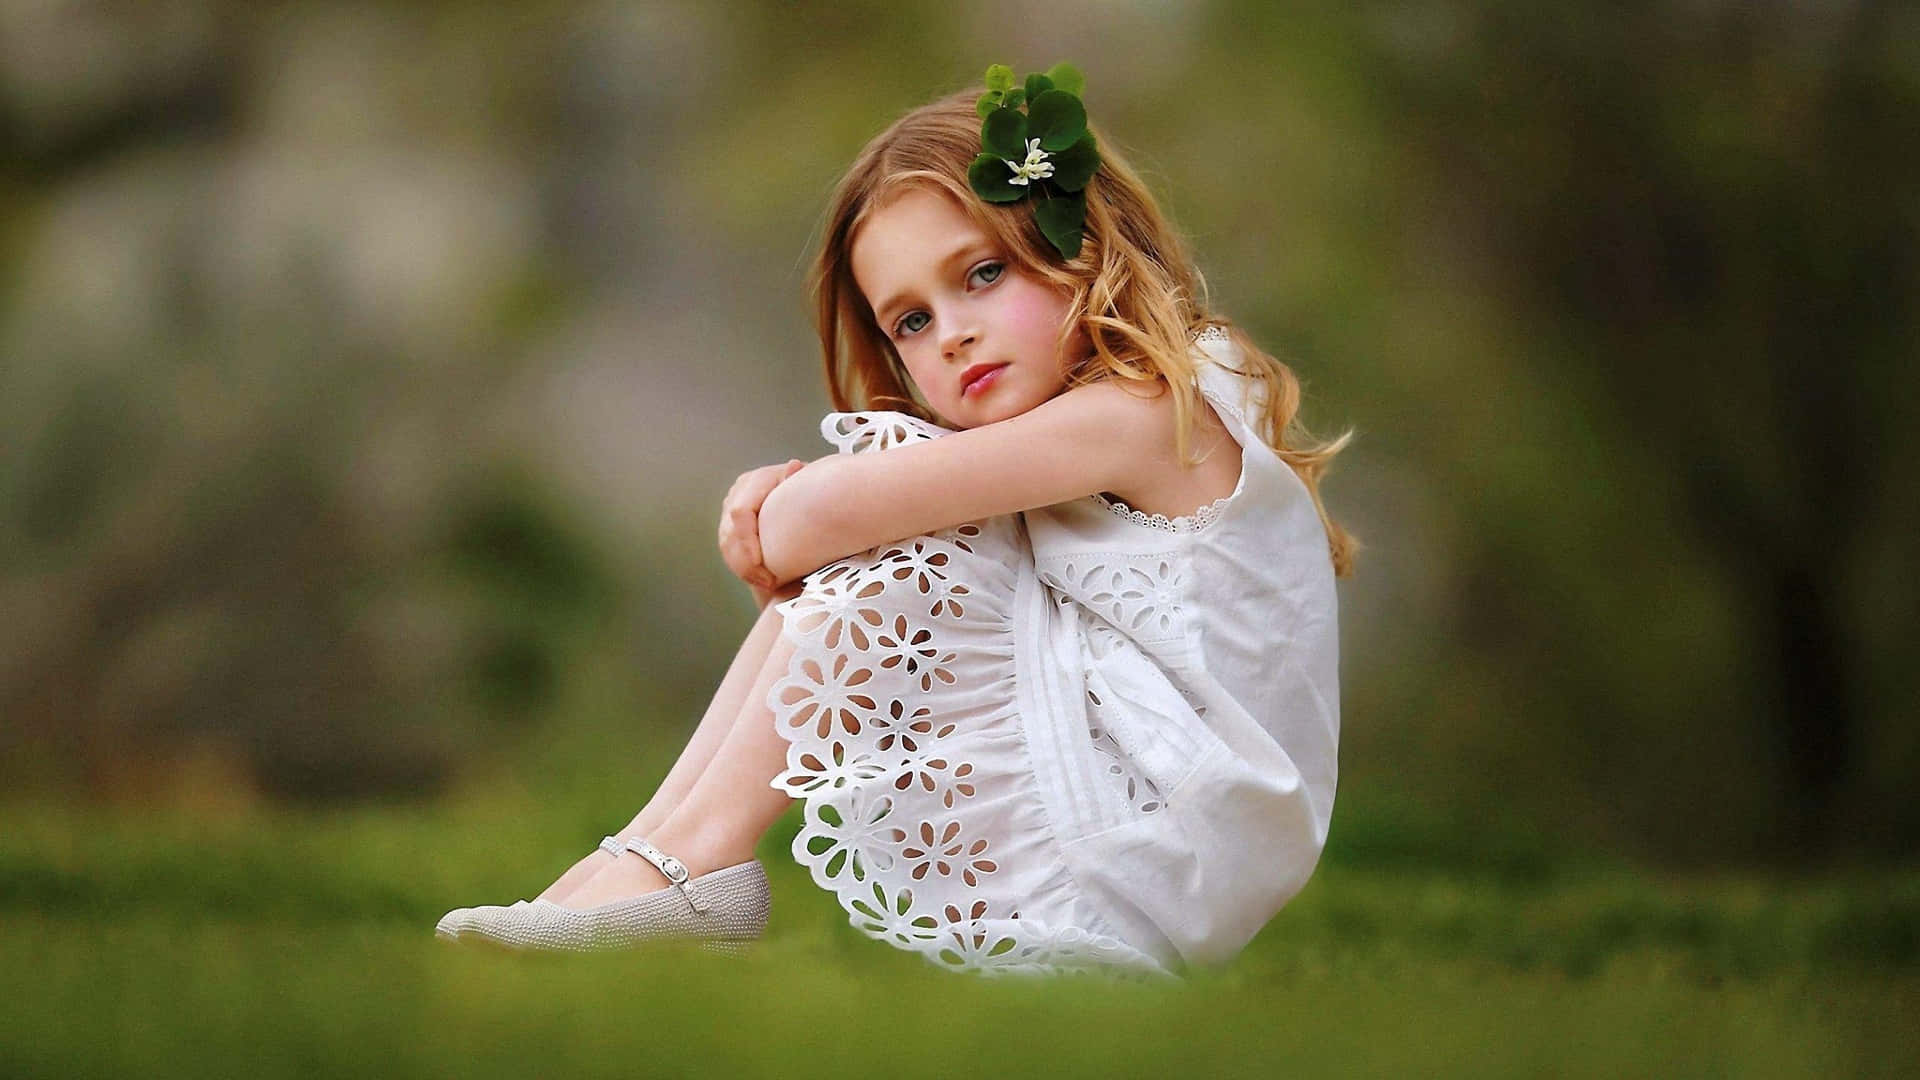 Pensive Young Girlin Nature.jpg Wallpaper